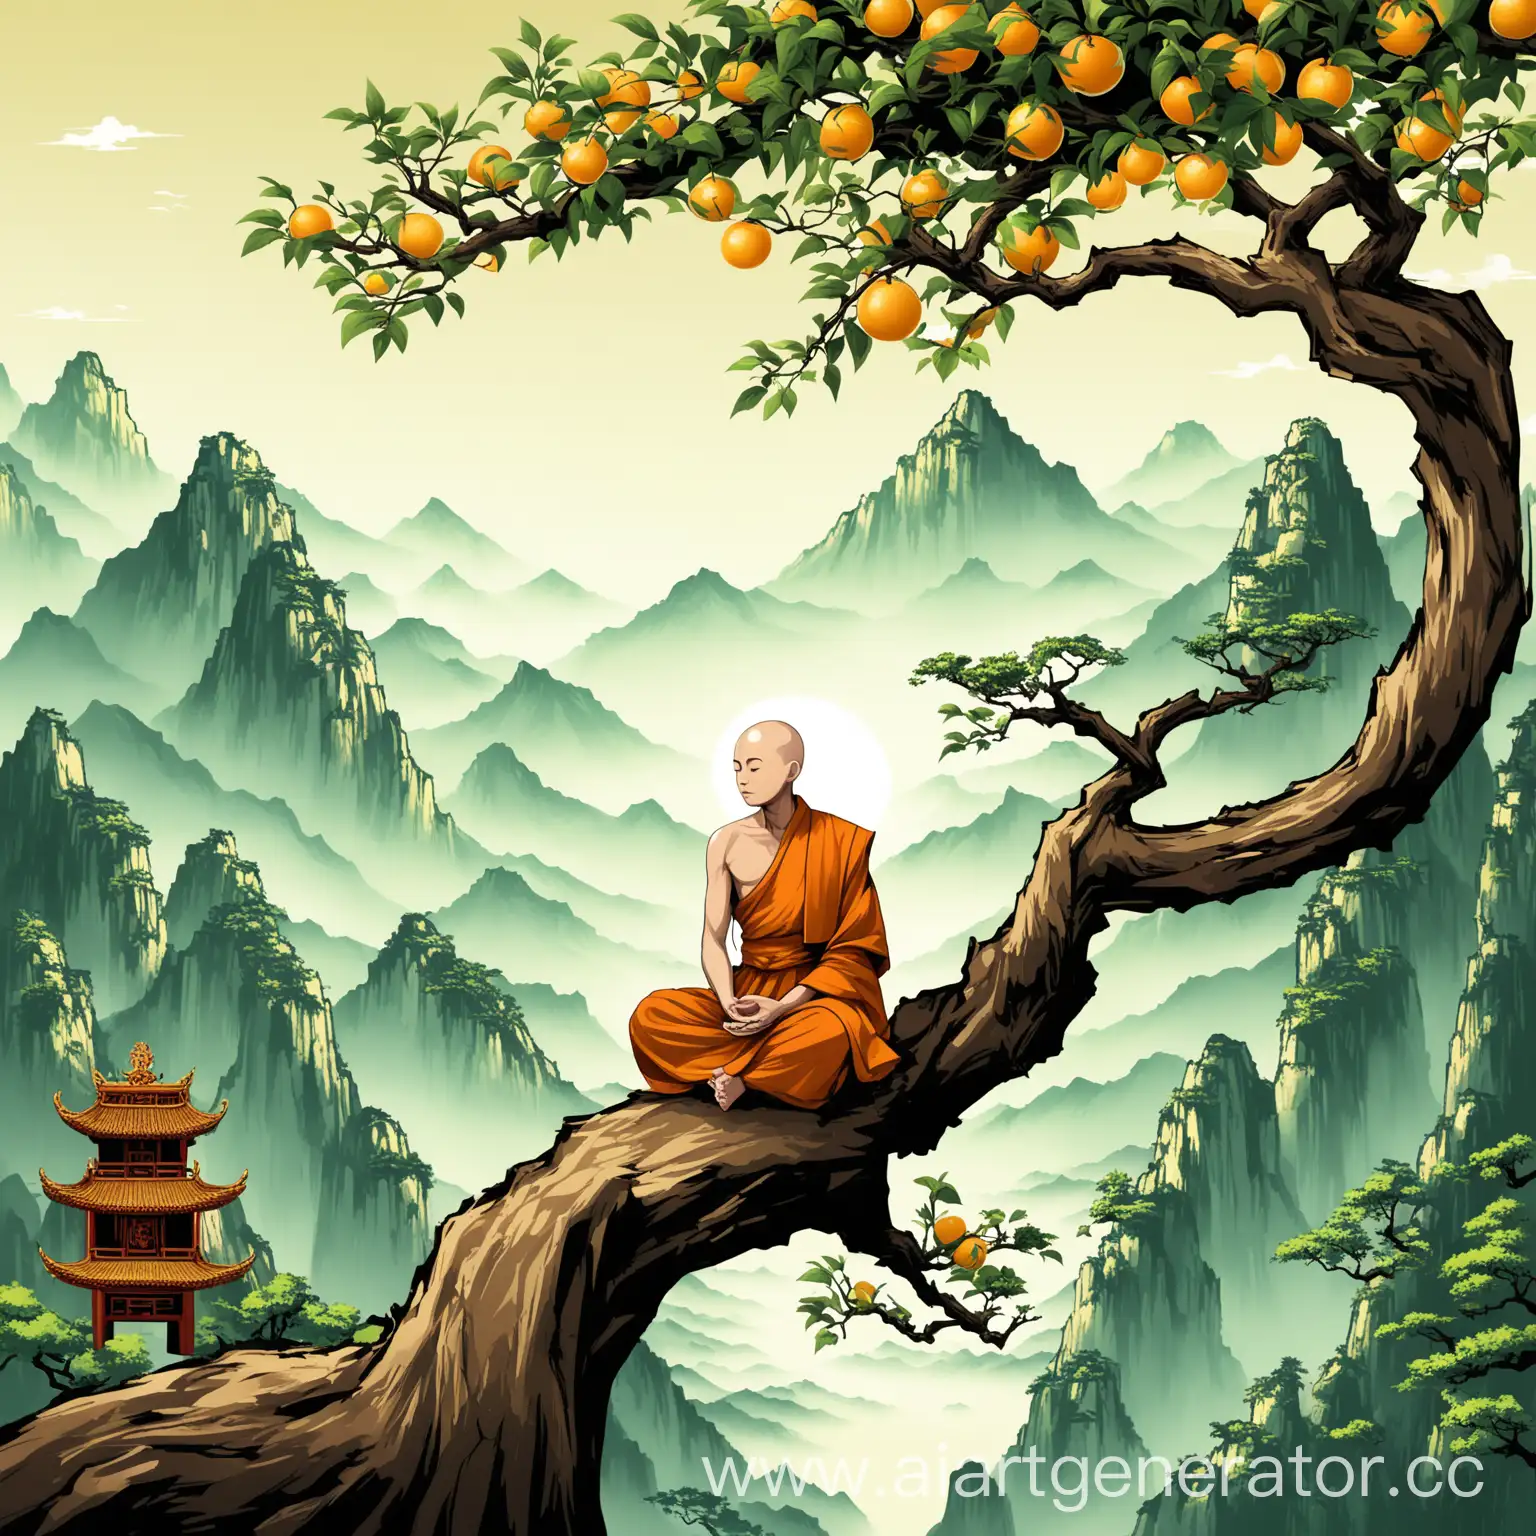 Meditating-Monk-Reaching-for-Fruit-in-Serene-Mountain-Landscape